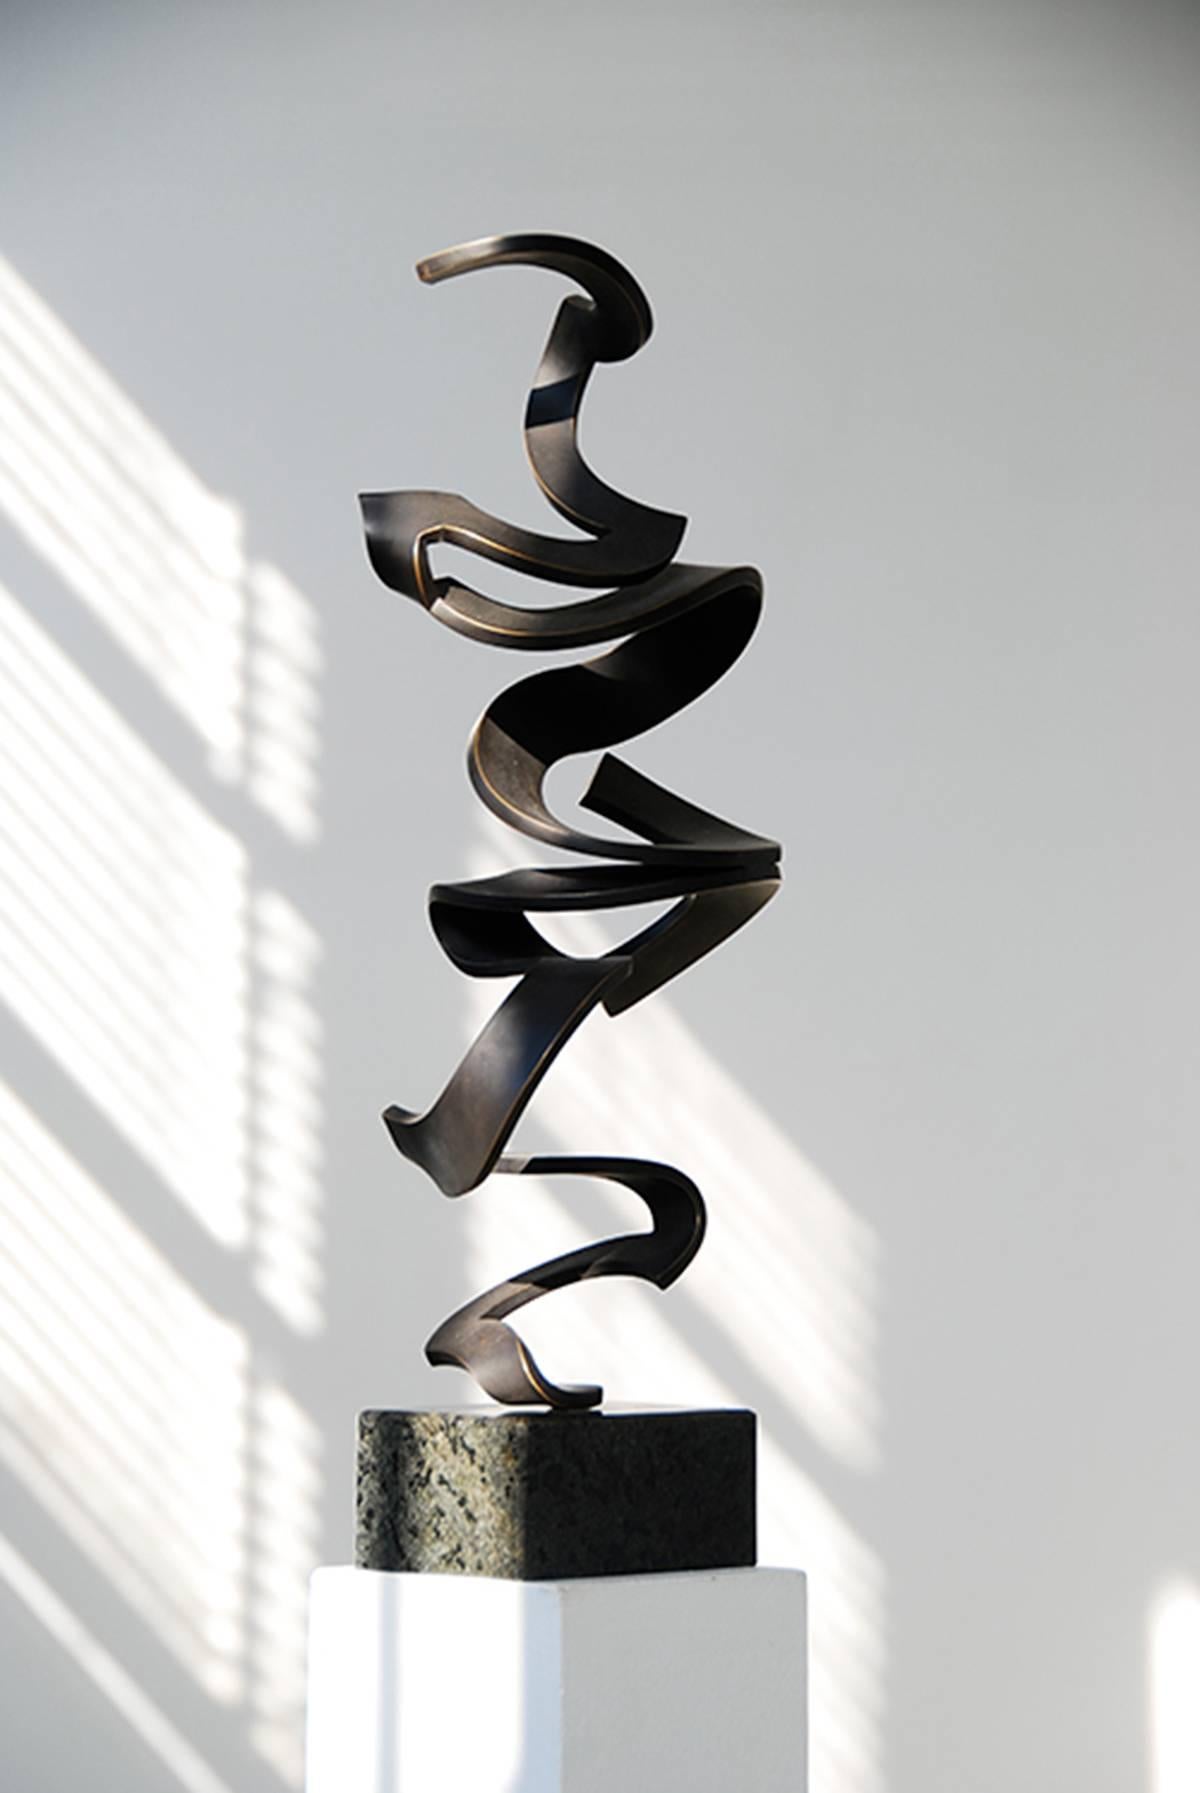 Artist: Kuno Vollet

Title: Schwerelos 4

Materials: Bronze sculpture with a dark patina on black granite base

Size: 65cm height of upper sculpture, base: 18 x 18 cm x 8 cm

Ed of 15 